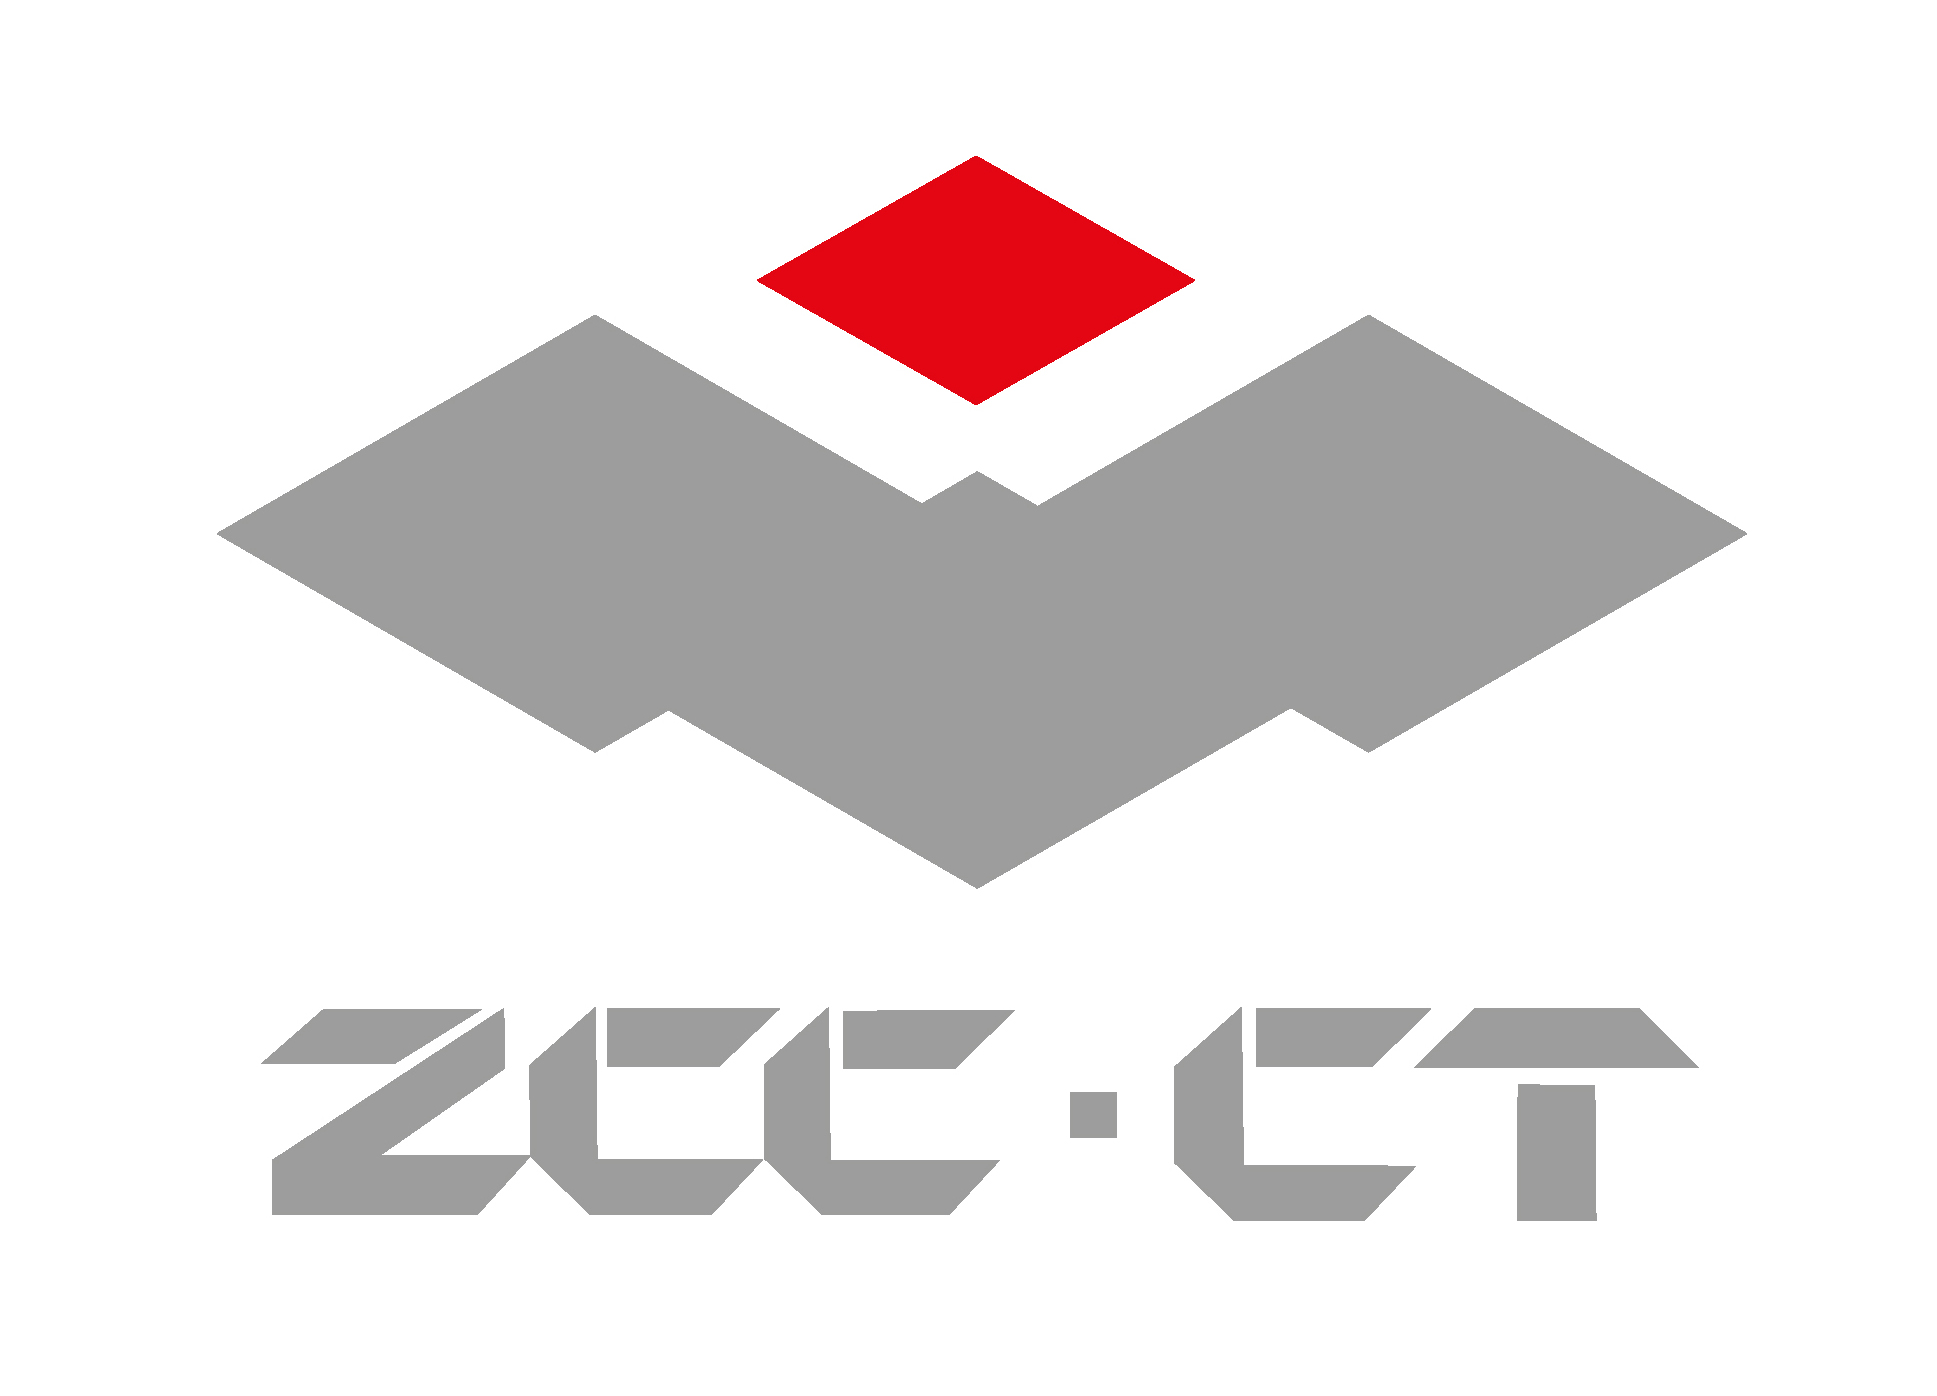 ZCC Cutting Tools Europe GmbH